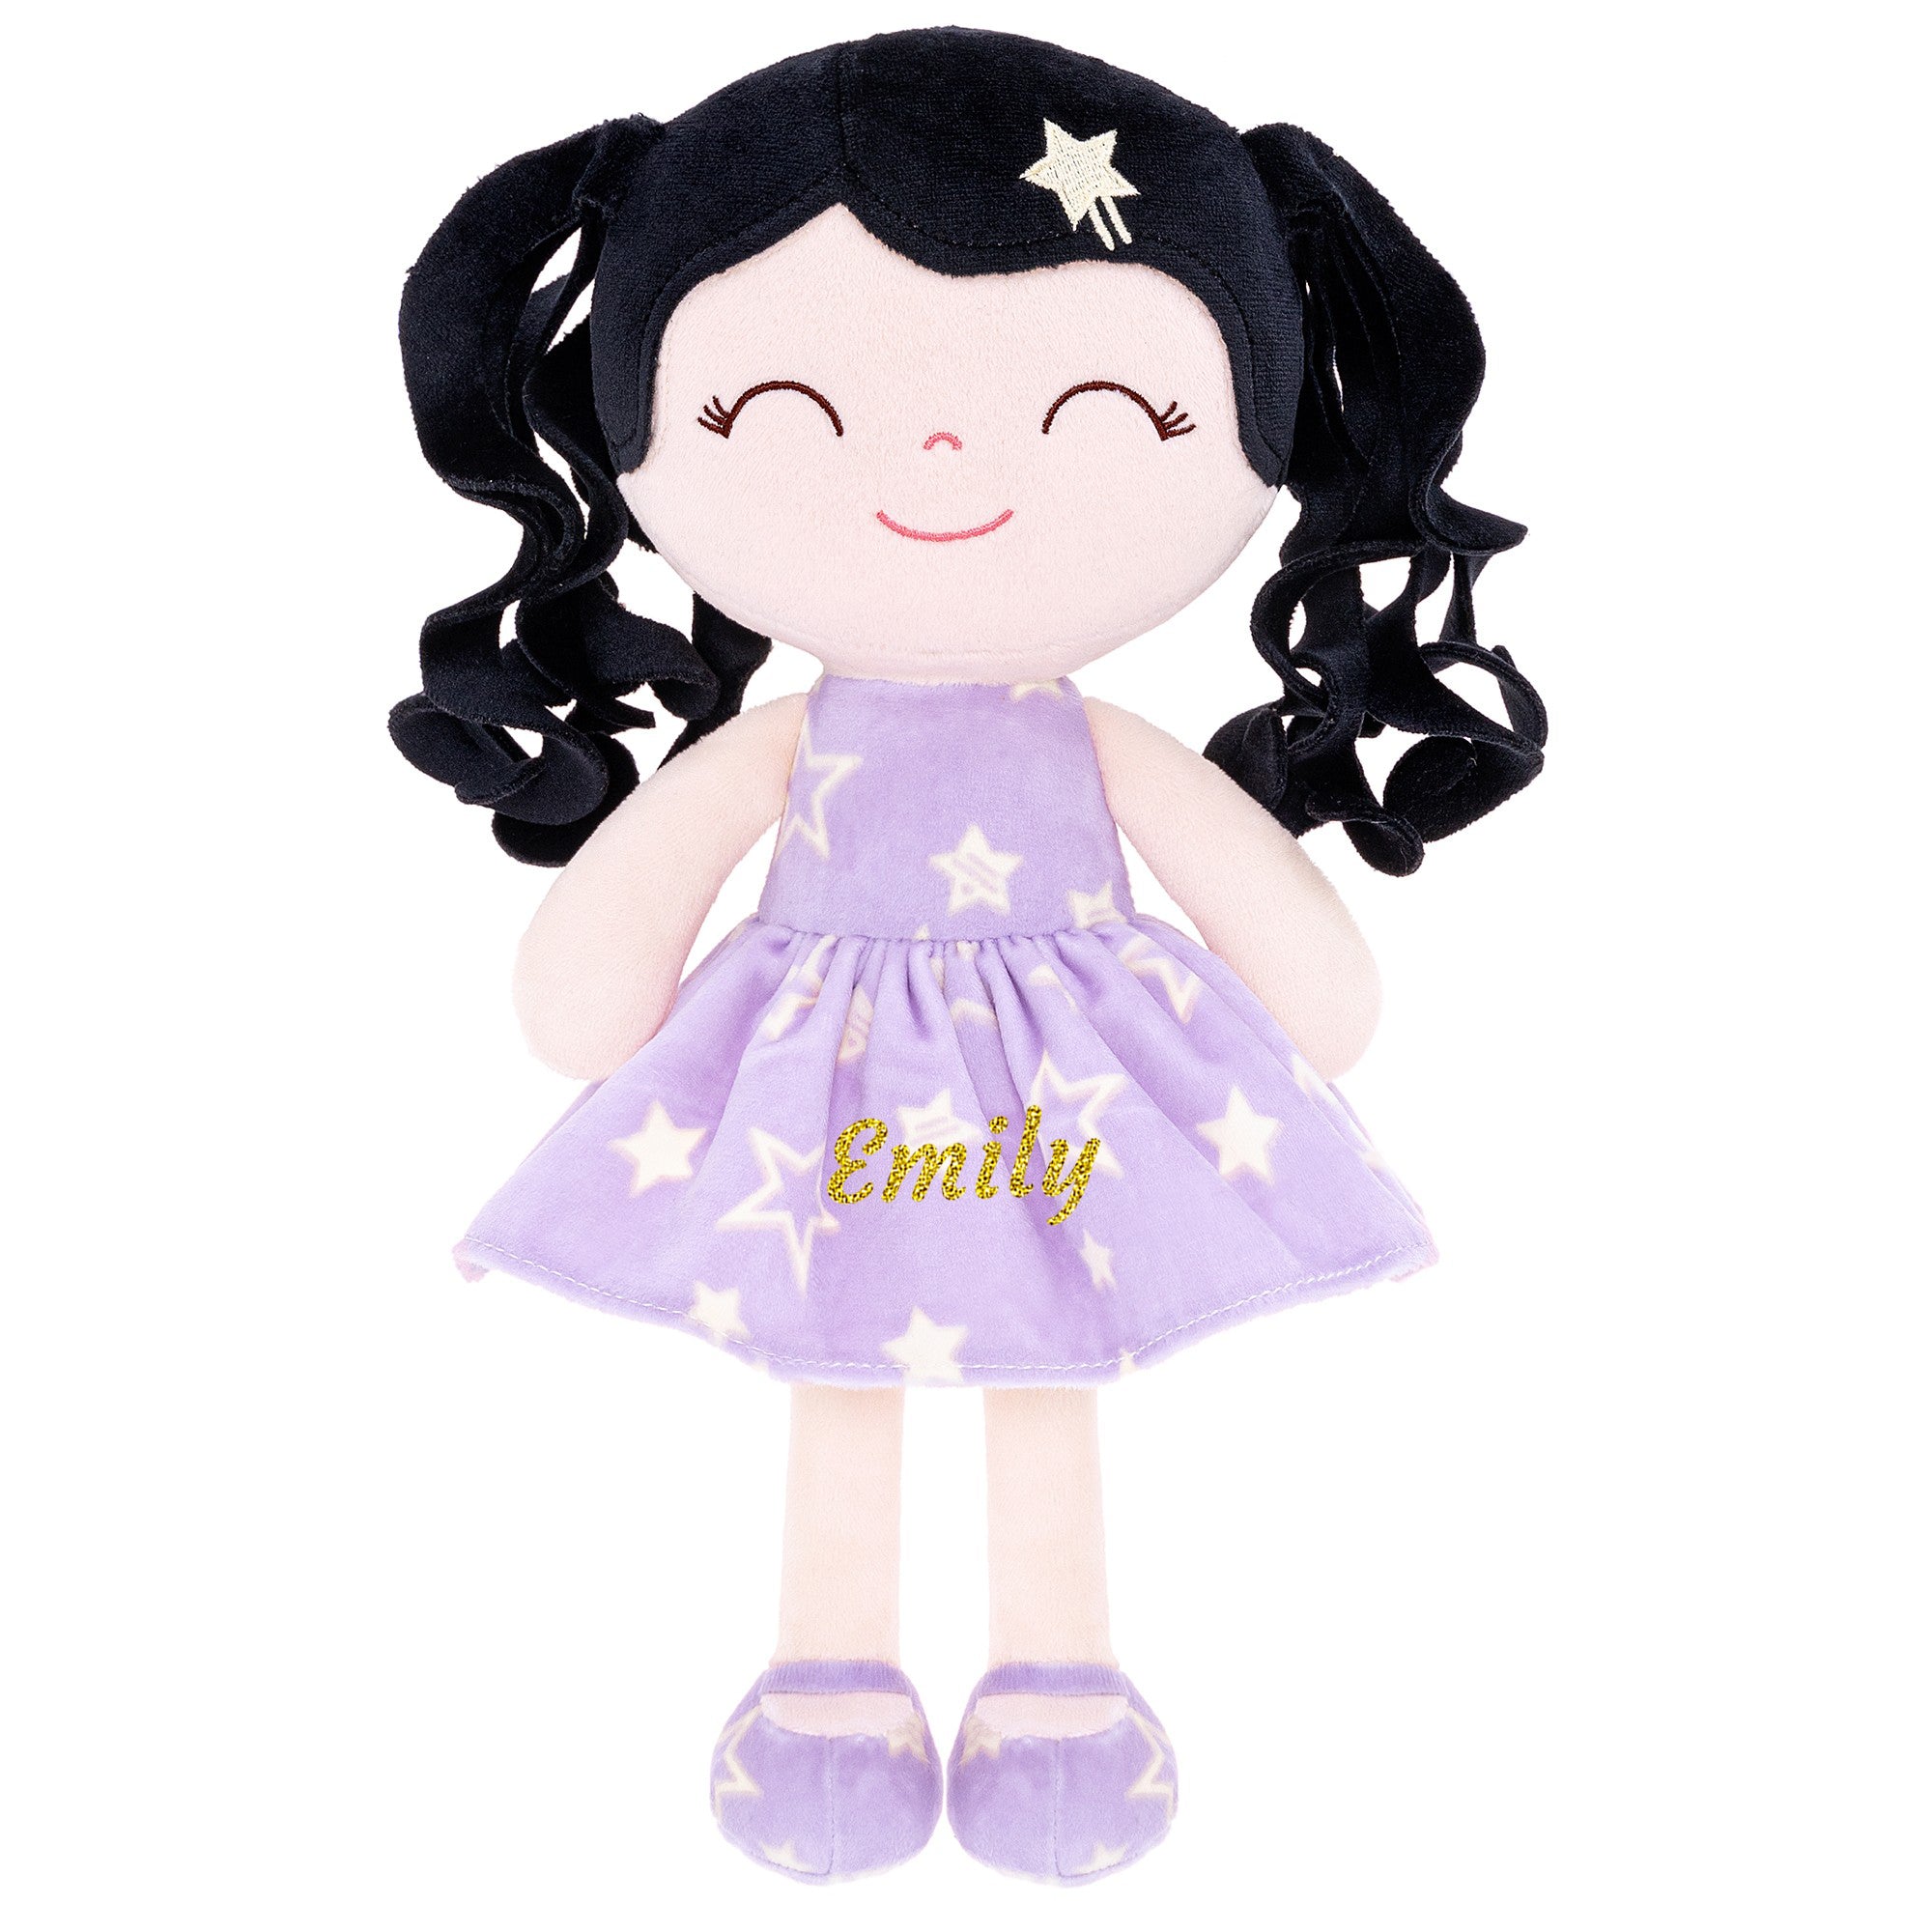 Gloveleya 12-inch Curly Hair Baby Star Dress Doll Black Purple